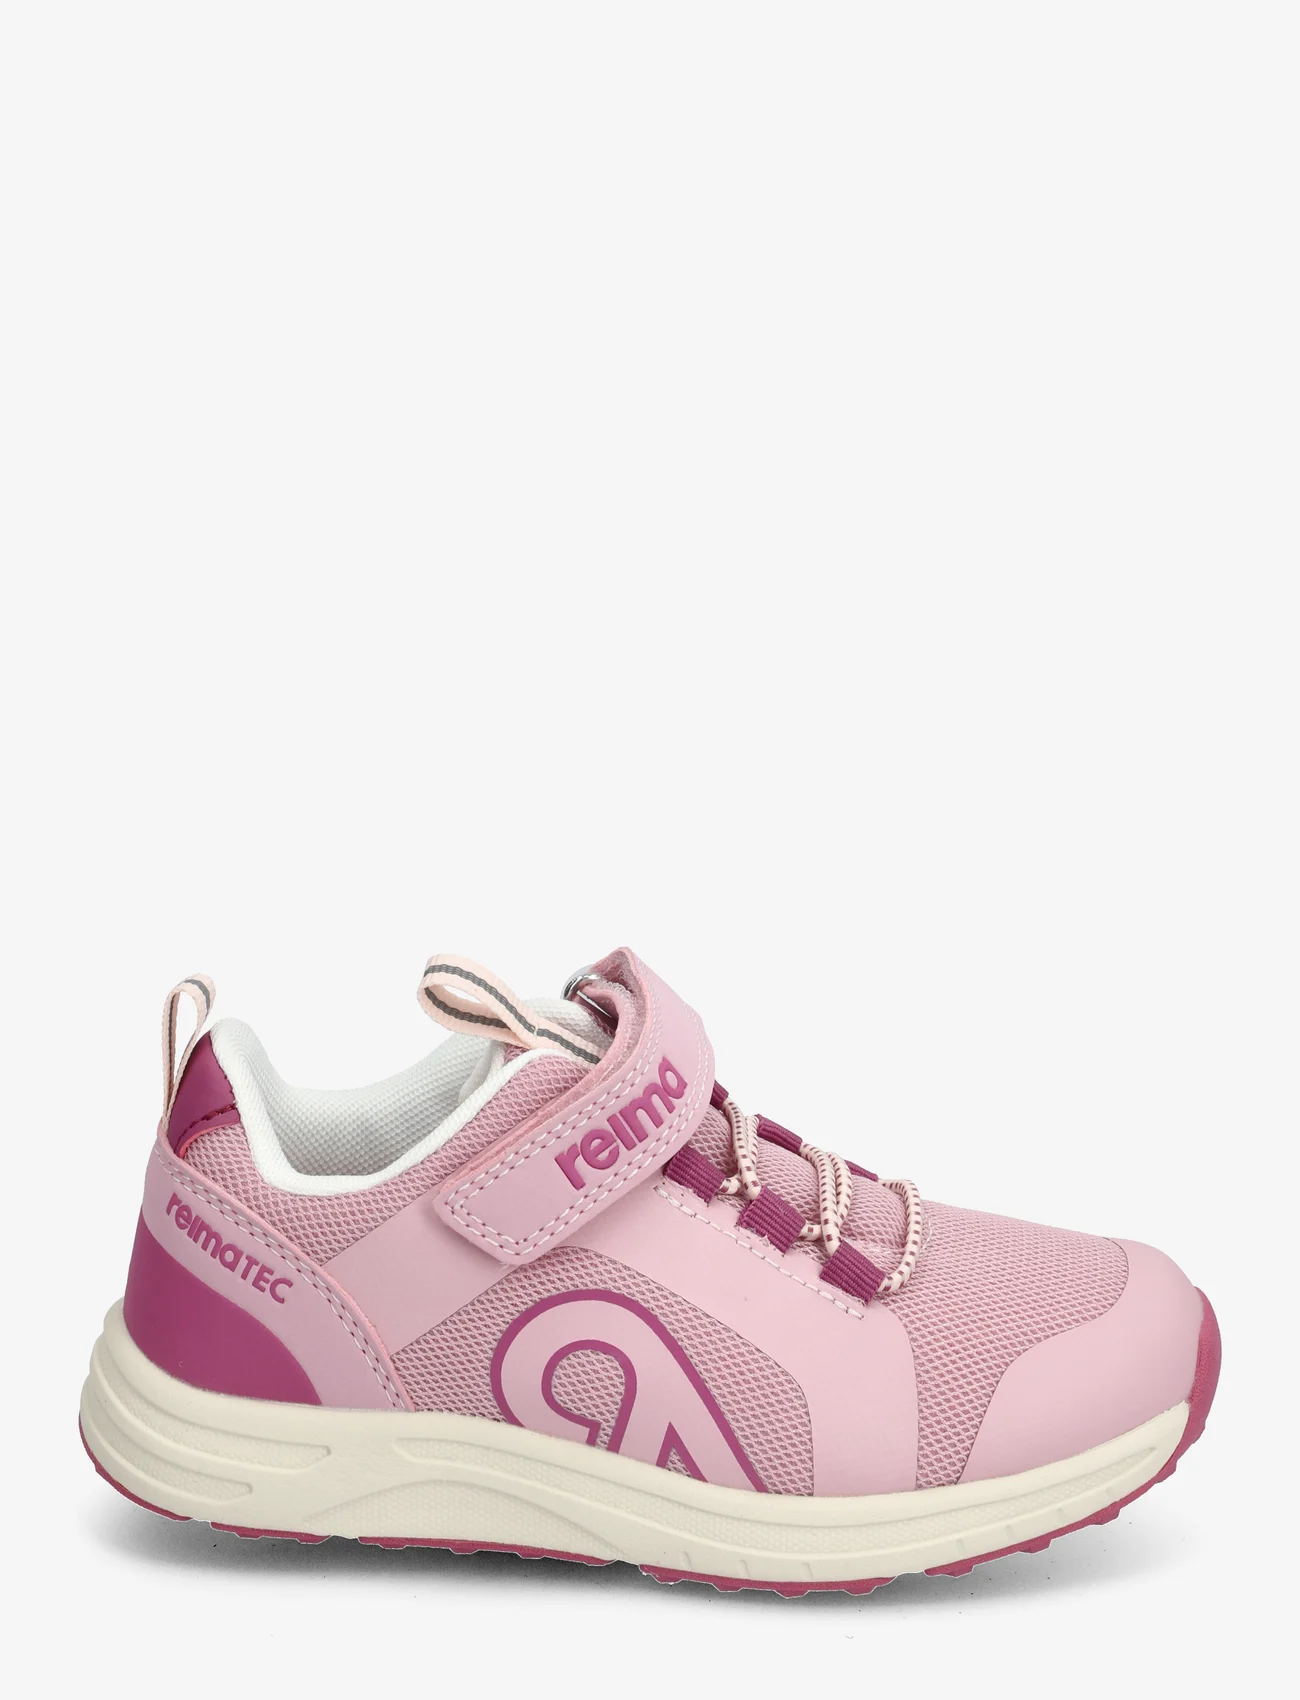 Reima - Reimatec shoes, Enkka - børn - grey pink - 1